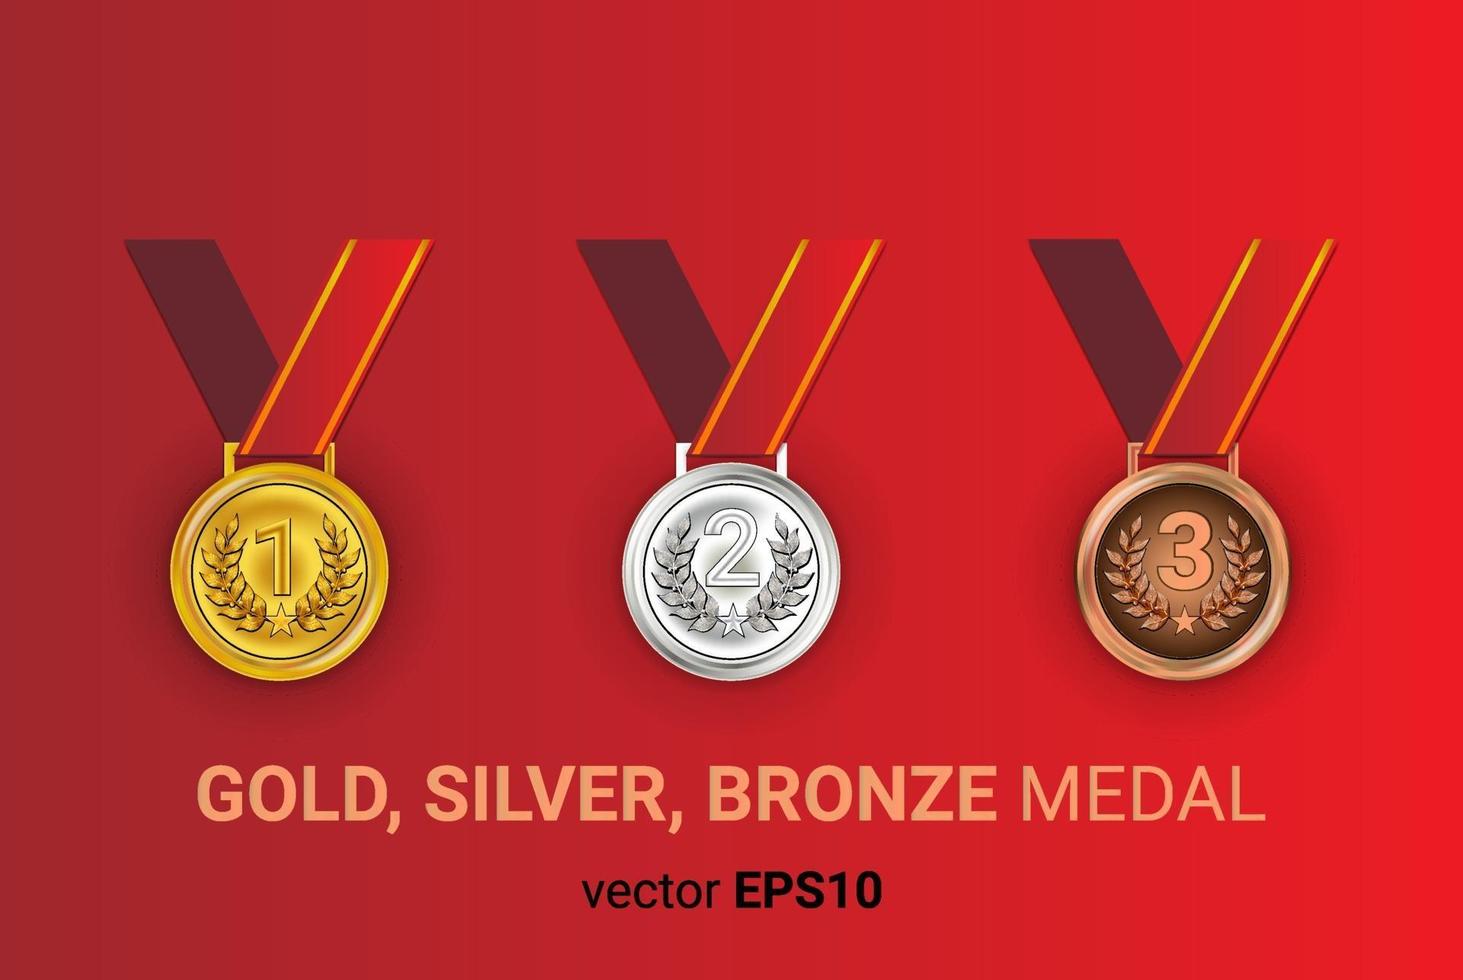 guld silver brons medalj illustration bild vektor eps 10